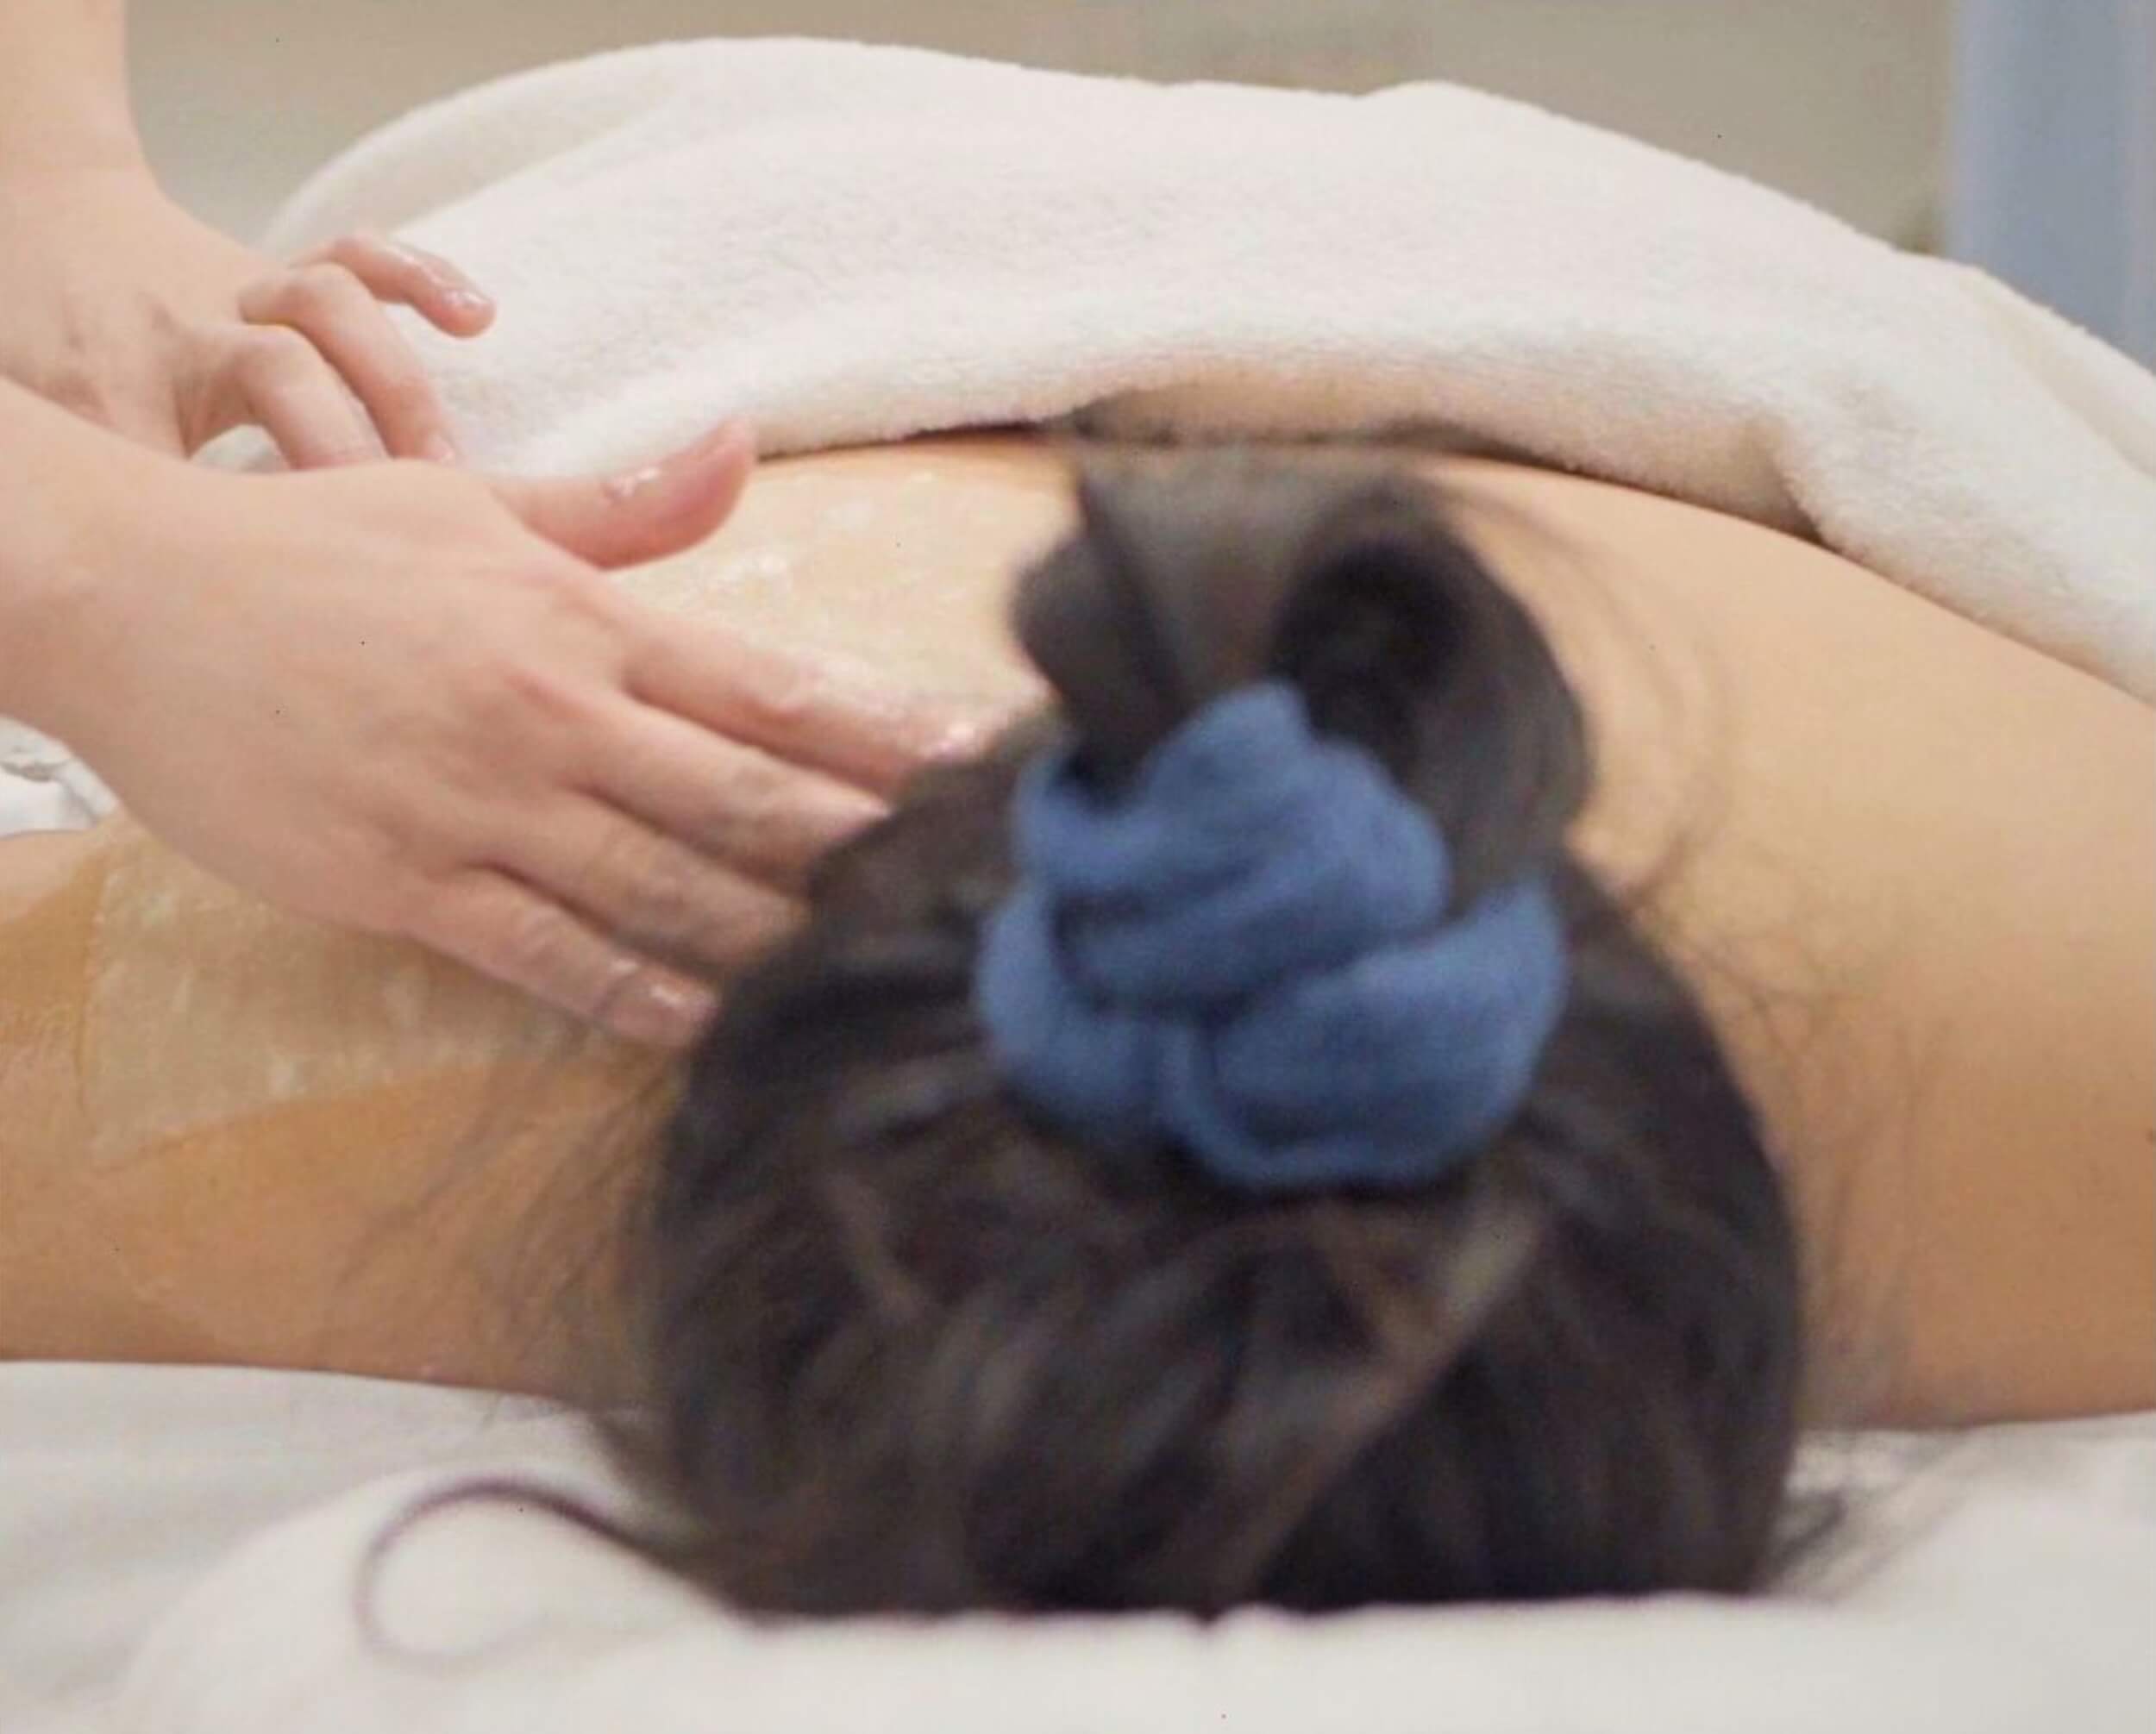 A massage therapist massaging a client’s back